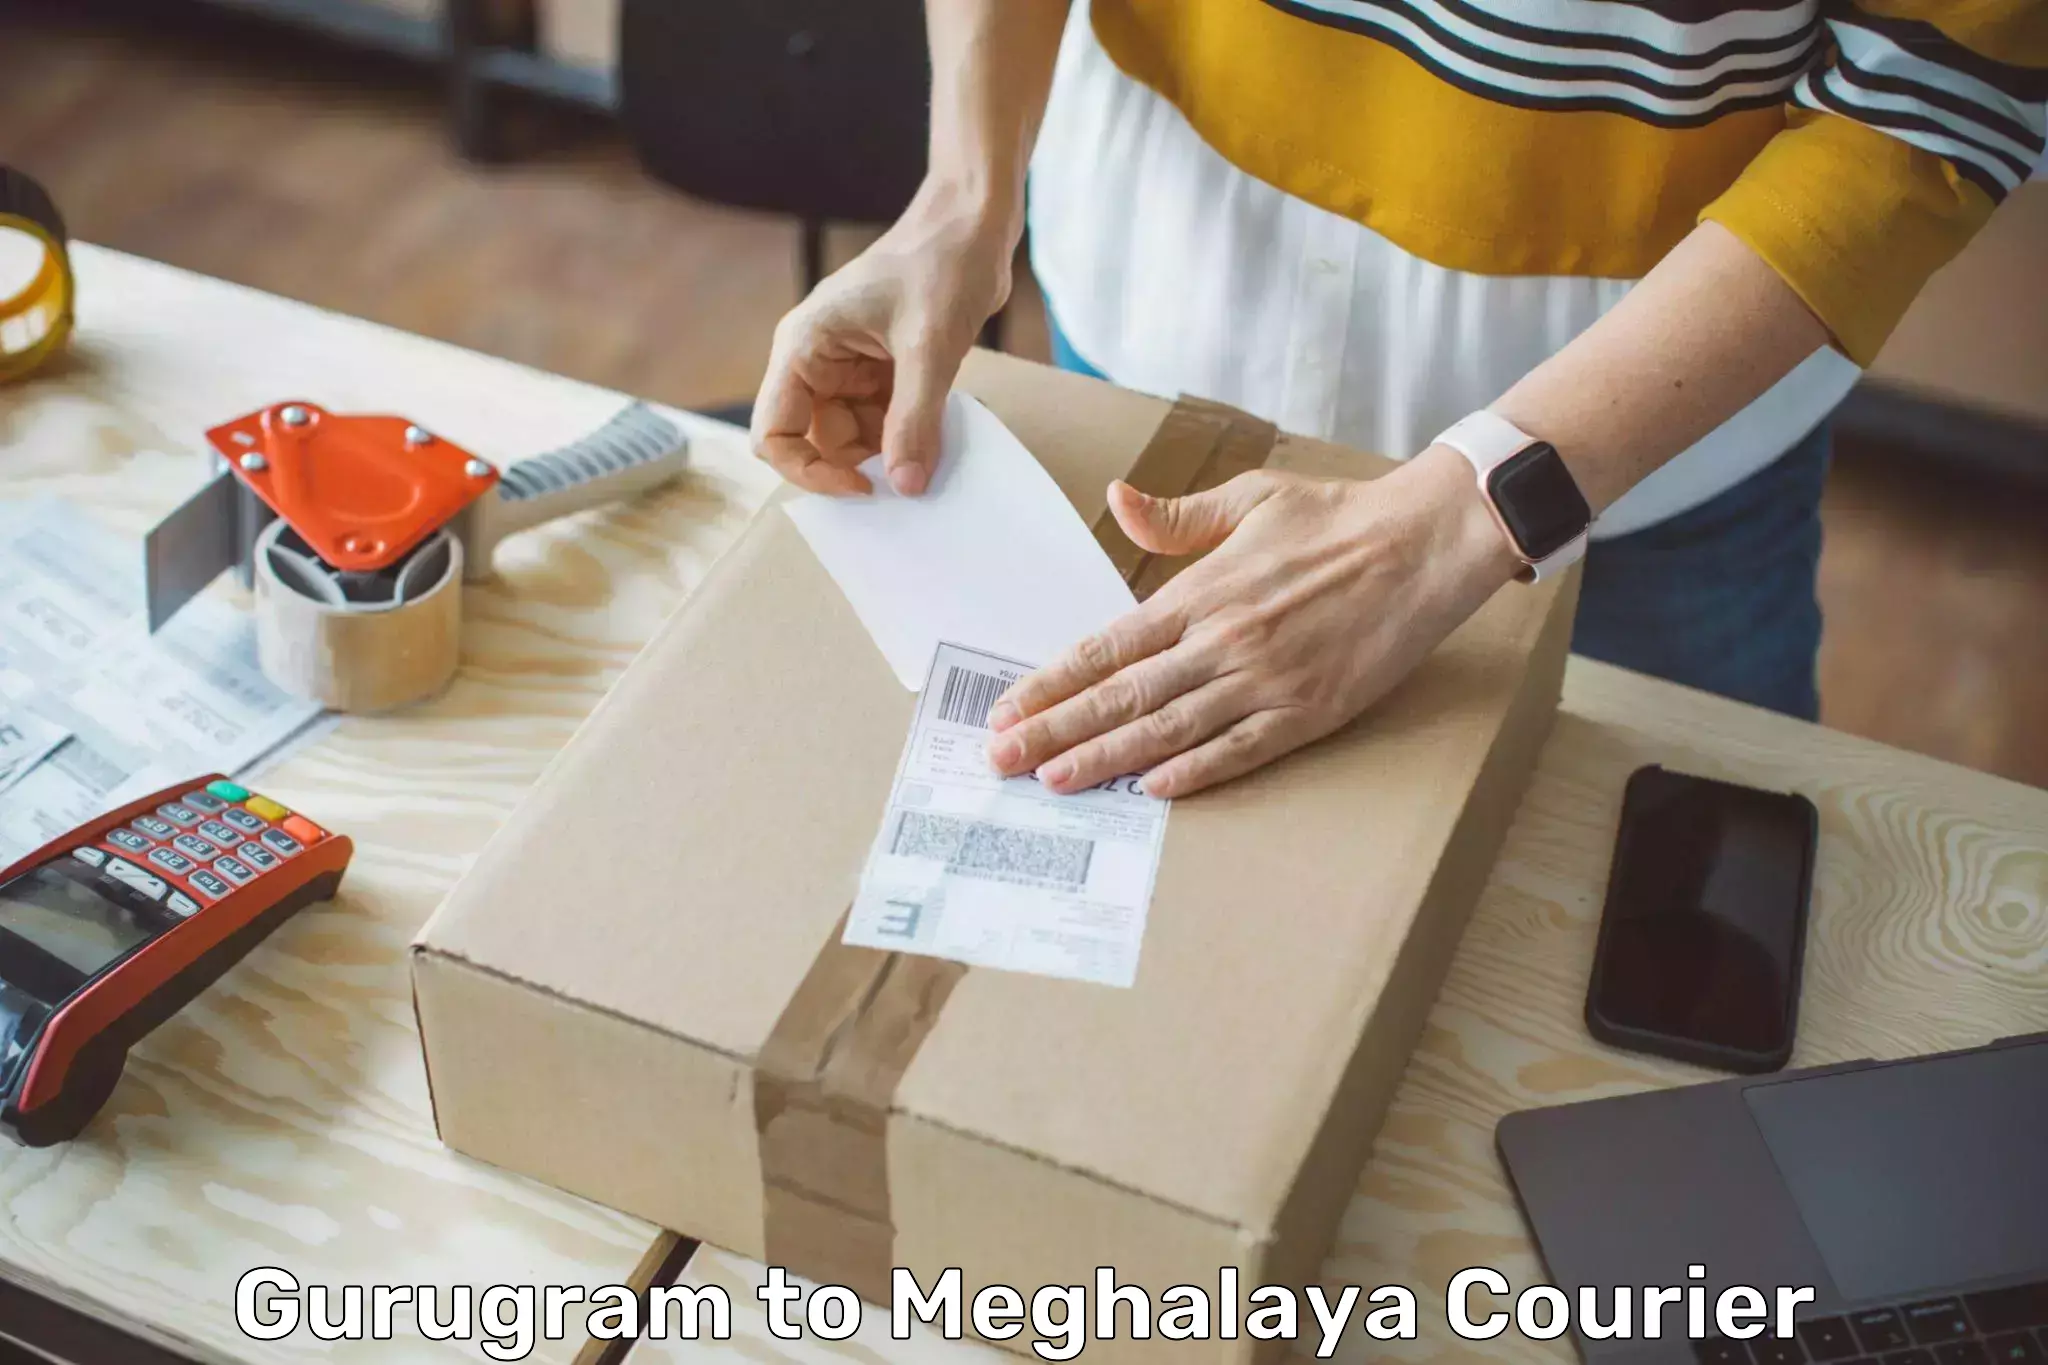 Reliable logistics providers Gurugram to Meghalaya